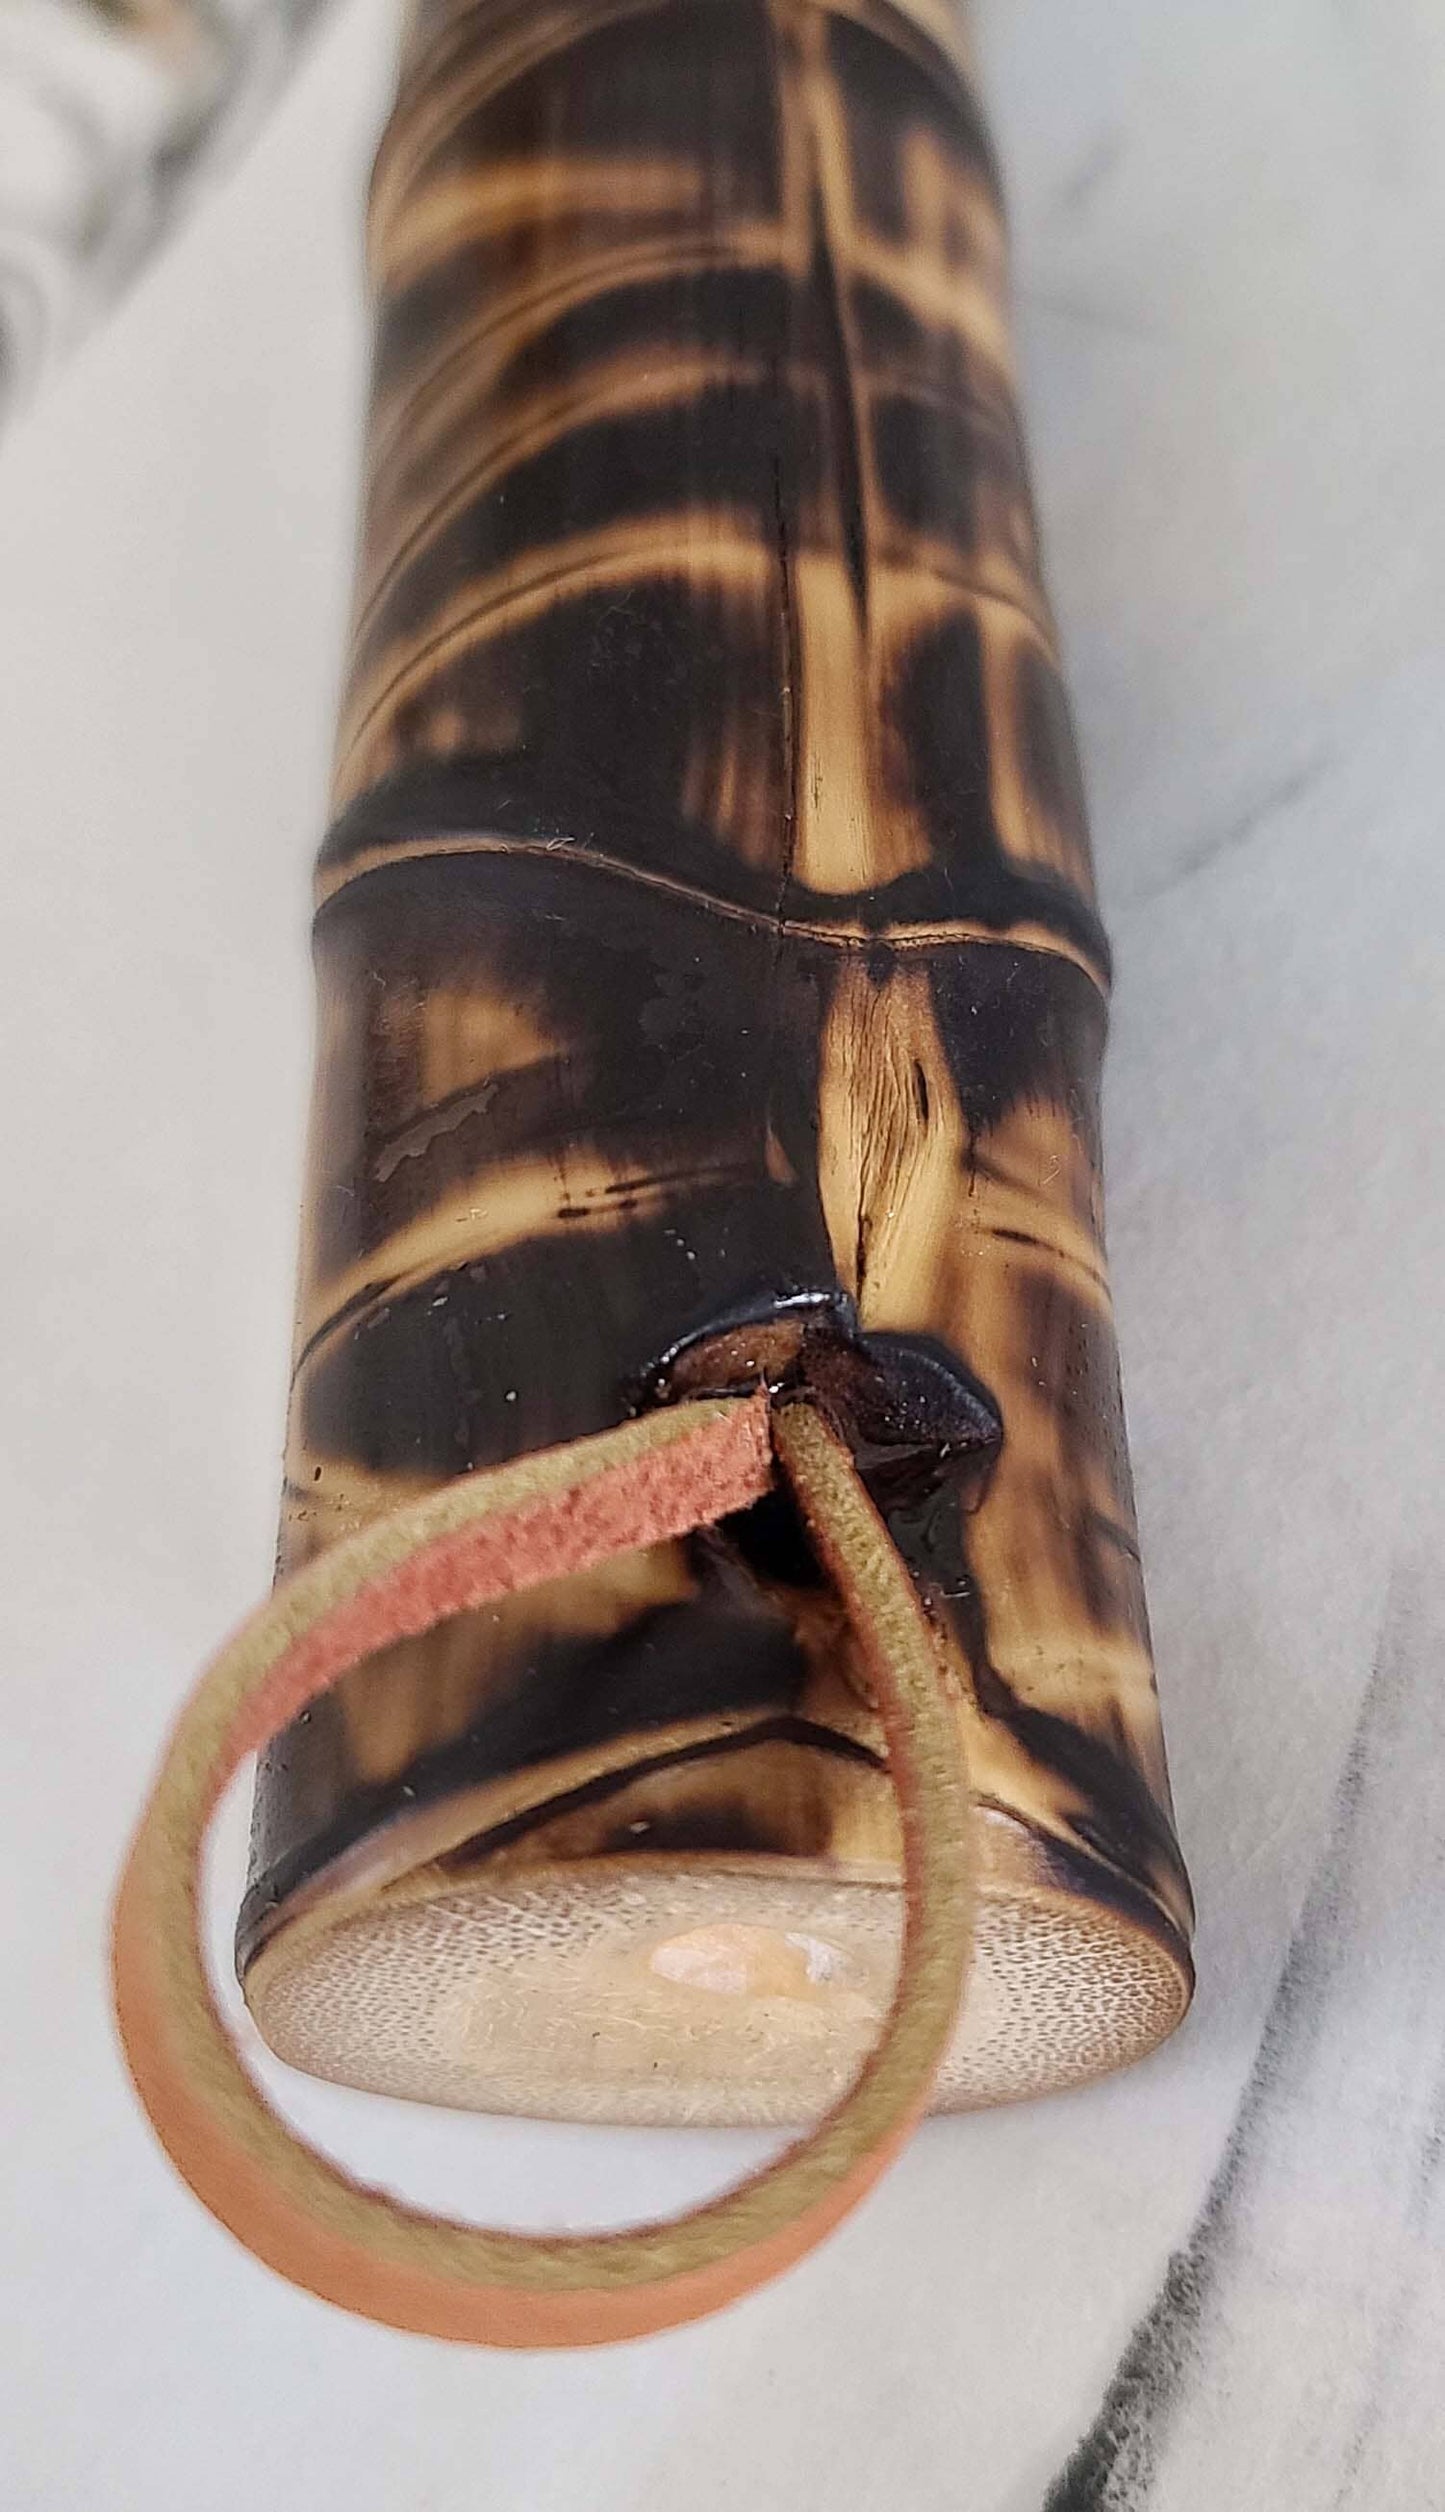 Goat Hair Mop Paintbrush with Bamboo Handle Painter's Brush Elizabeth Schowachert Art